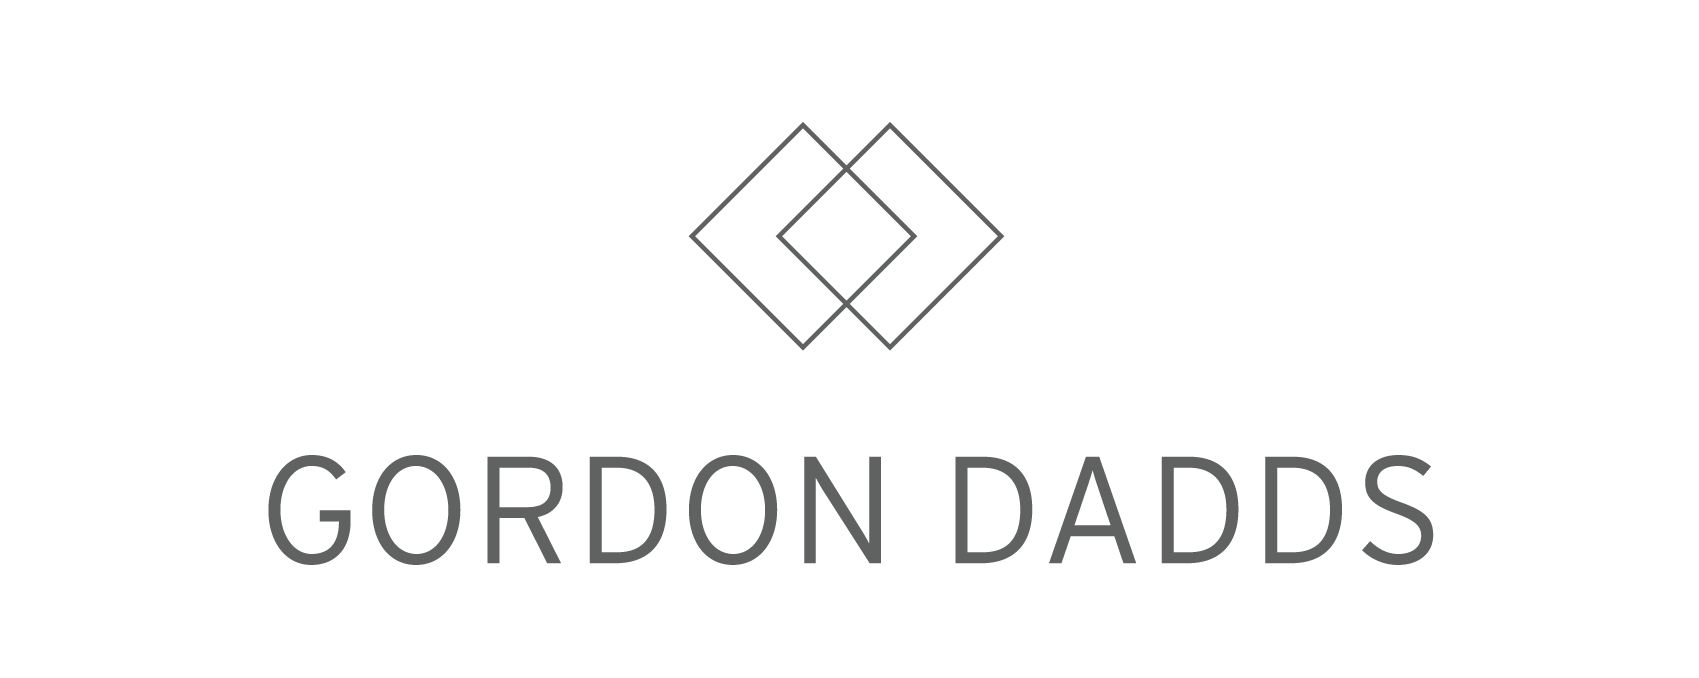 Gordon Dadds Group